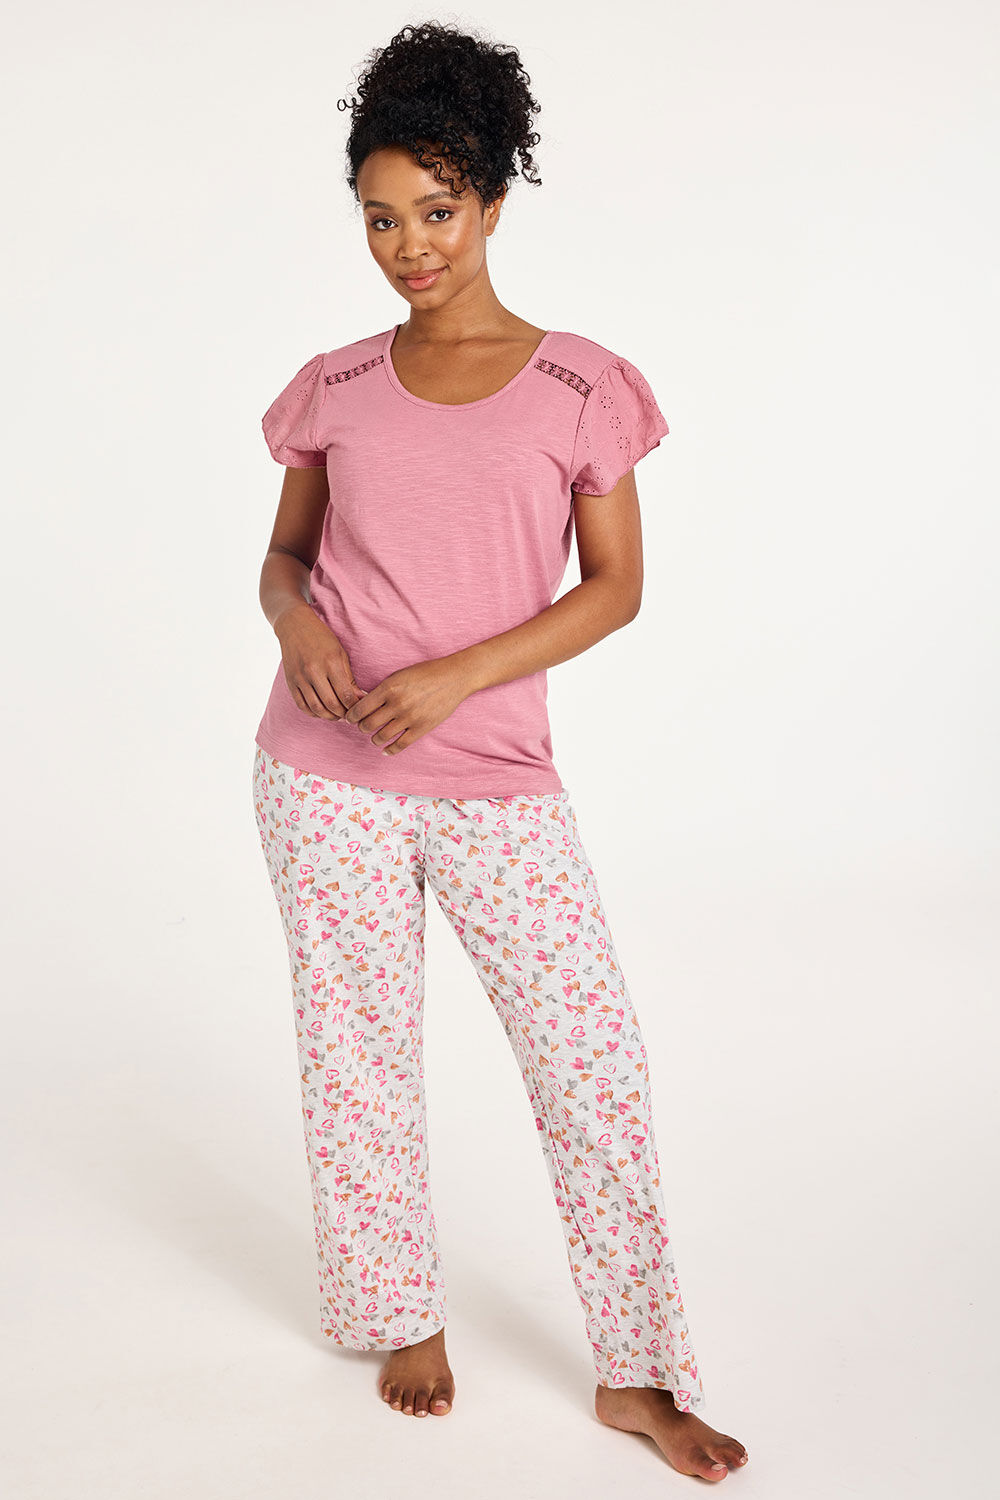 Bonmarche Pink Heart Print Frill Detail Pyjama Set, Size: 20-22